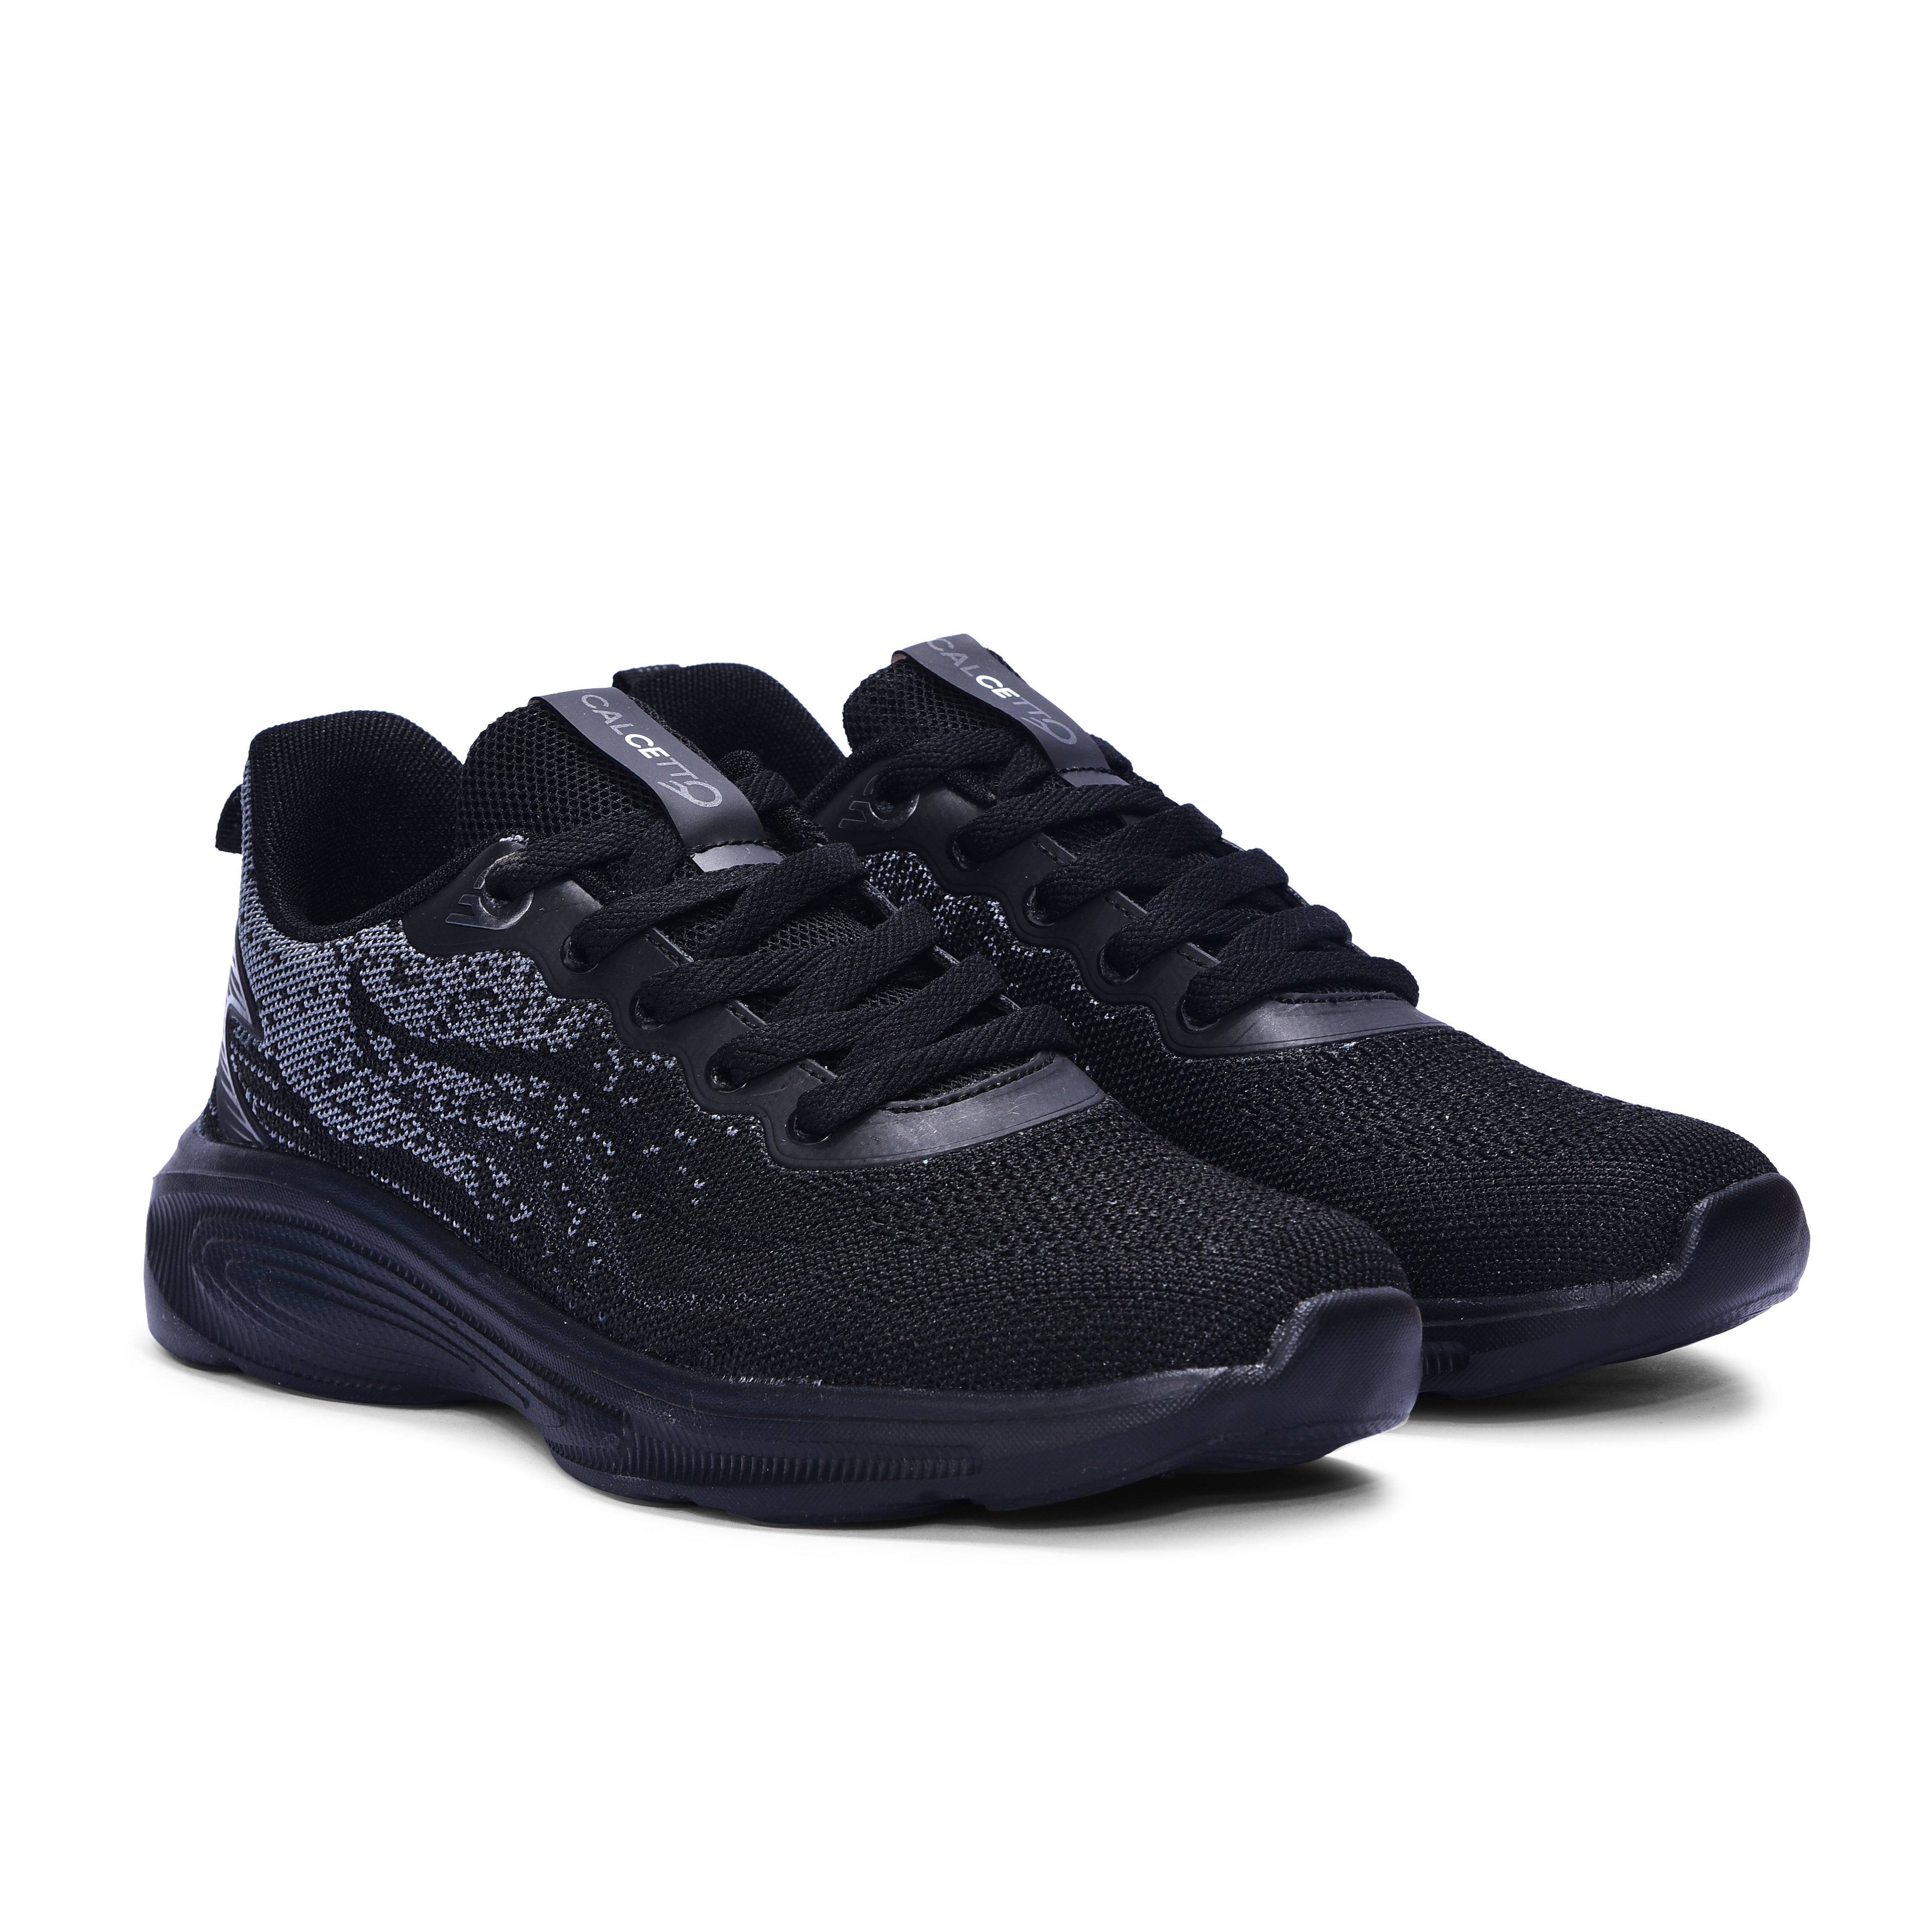 Calcetto CLT-9825 Black Casual Shoe For Women